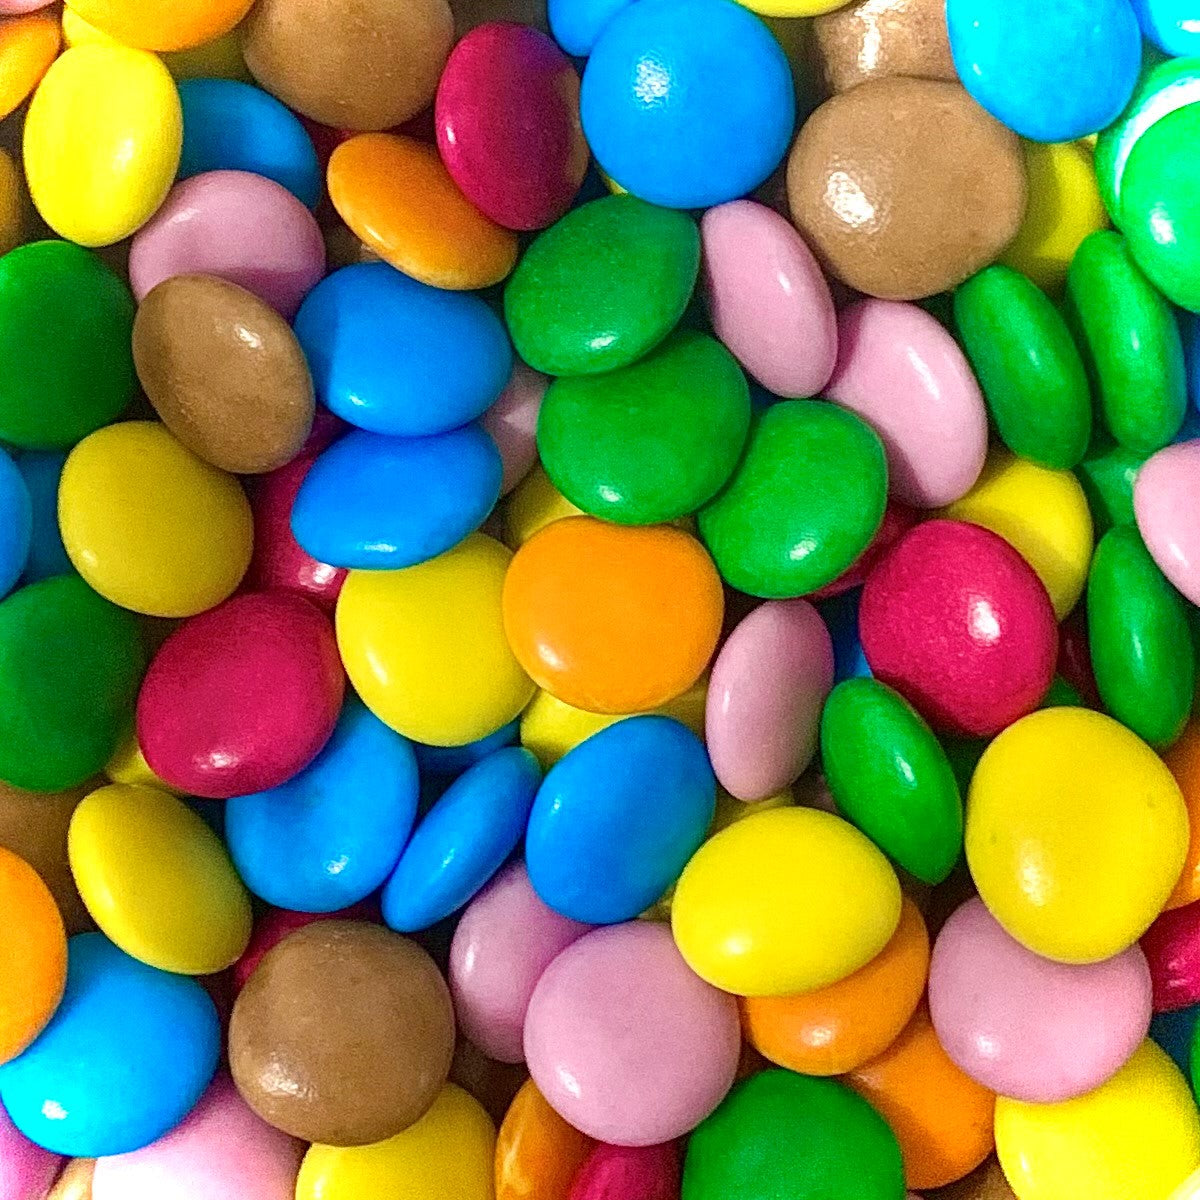 Chocolate Beans